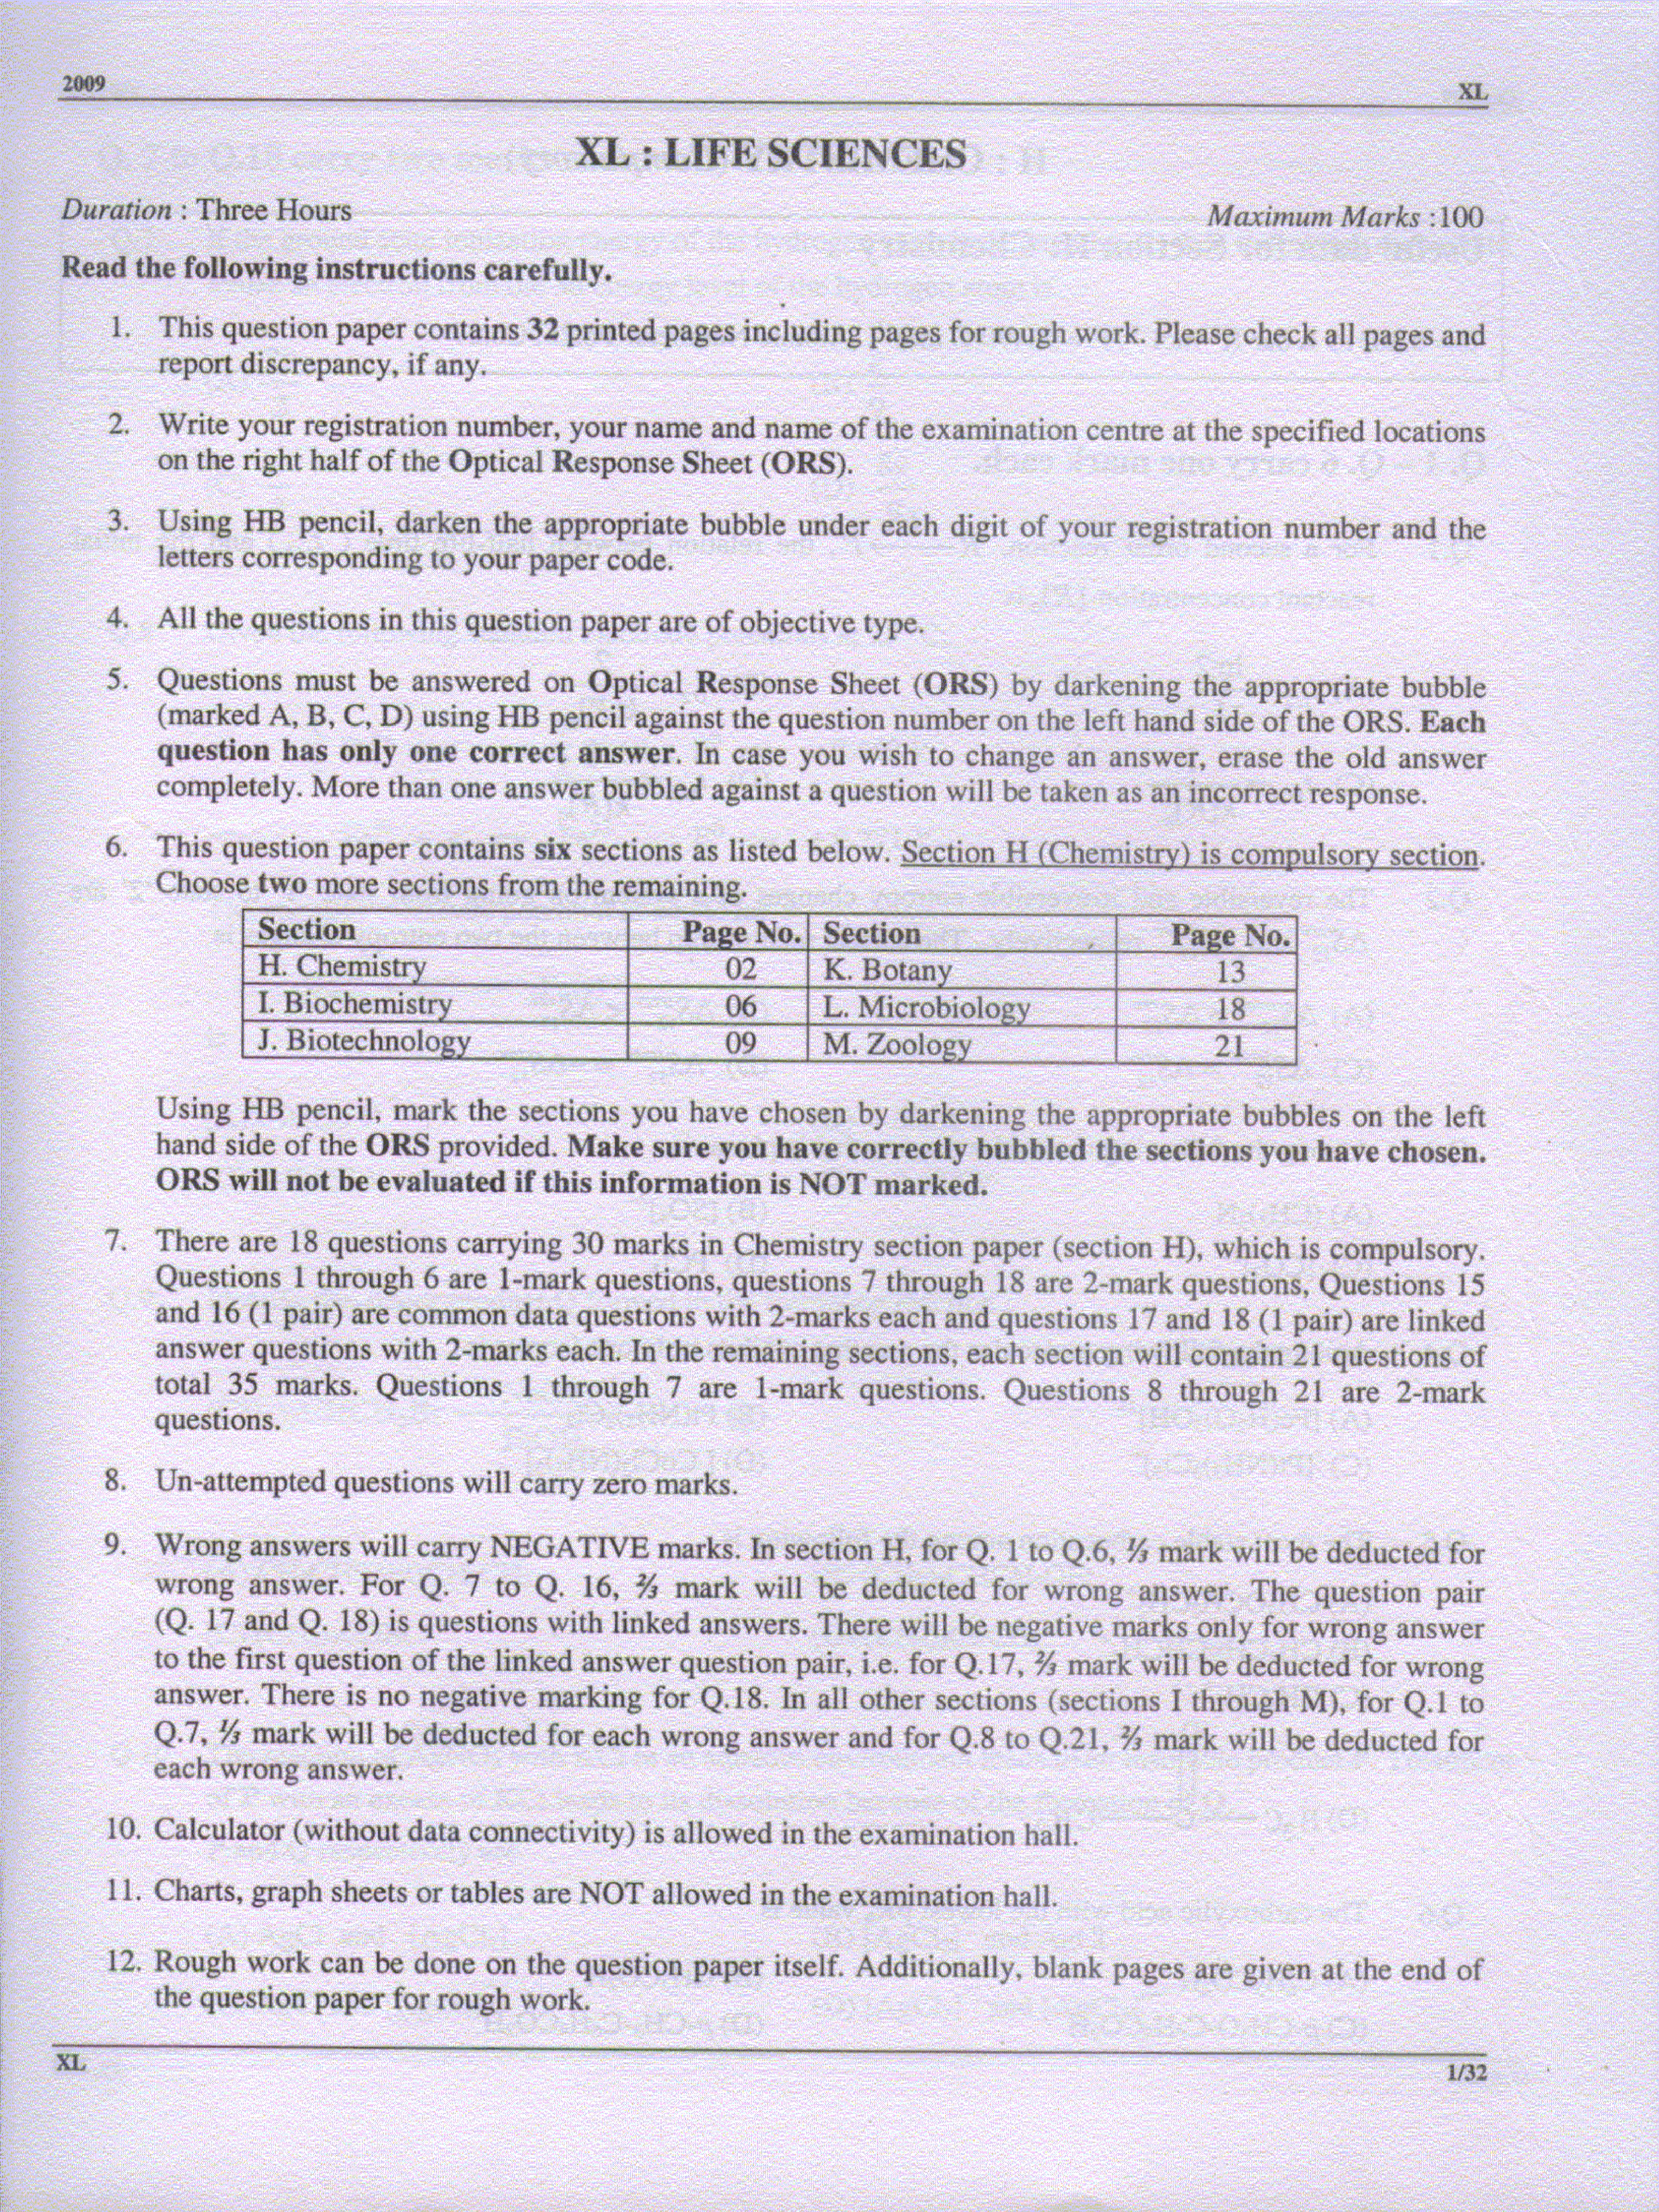 GATE Exam Question Paper 2009 Life Sciences 1